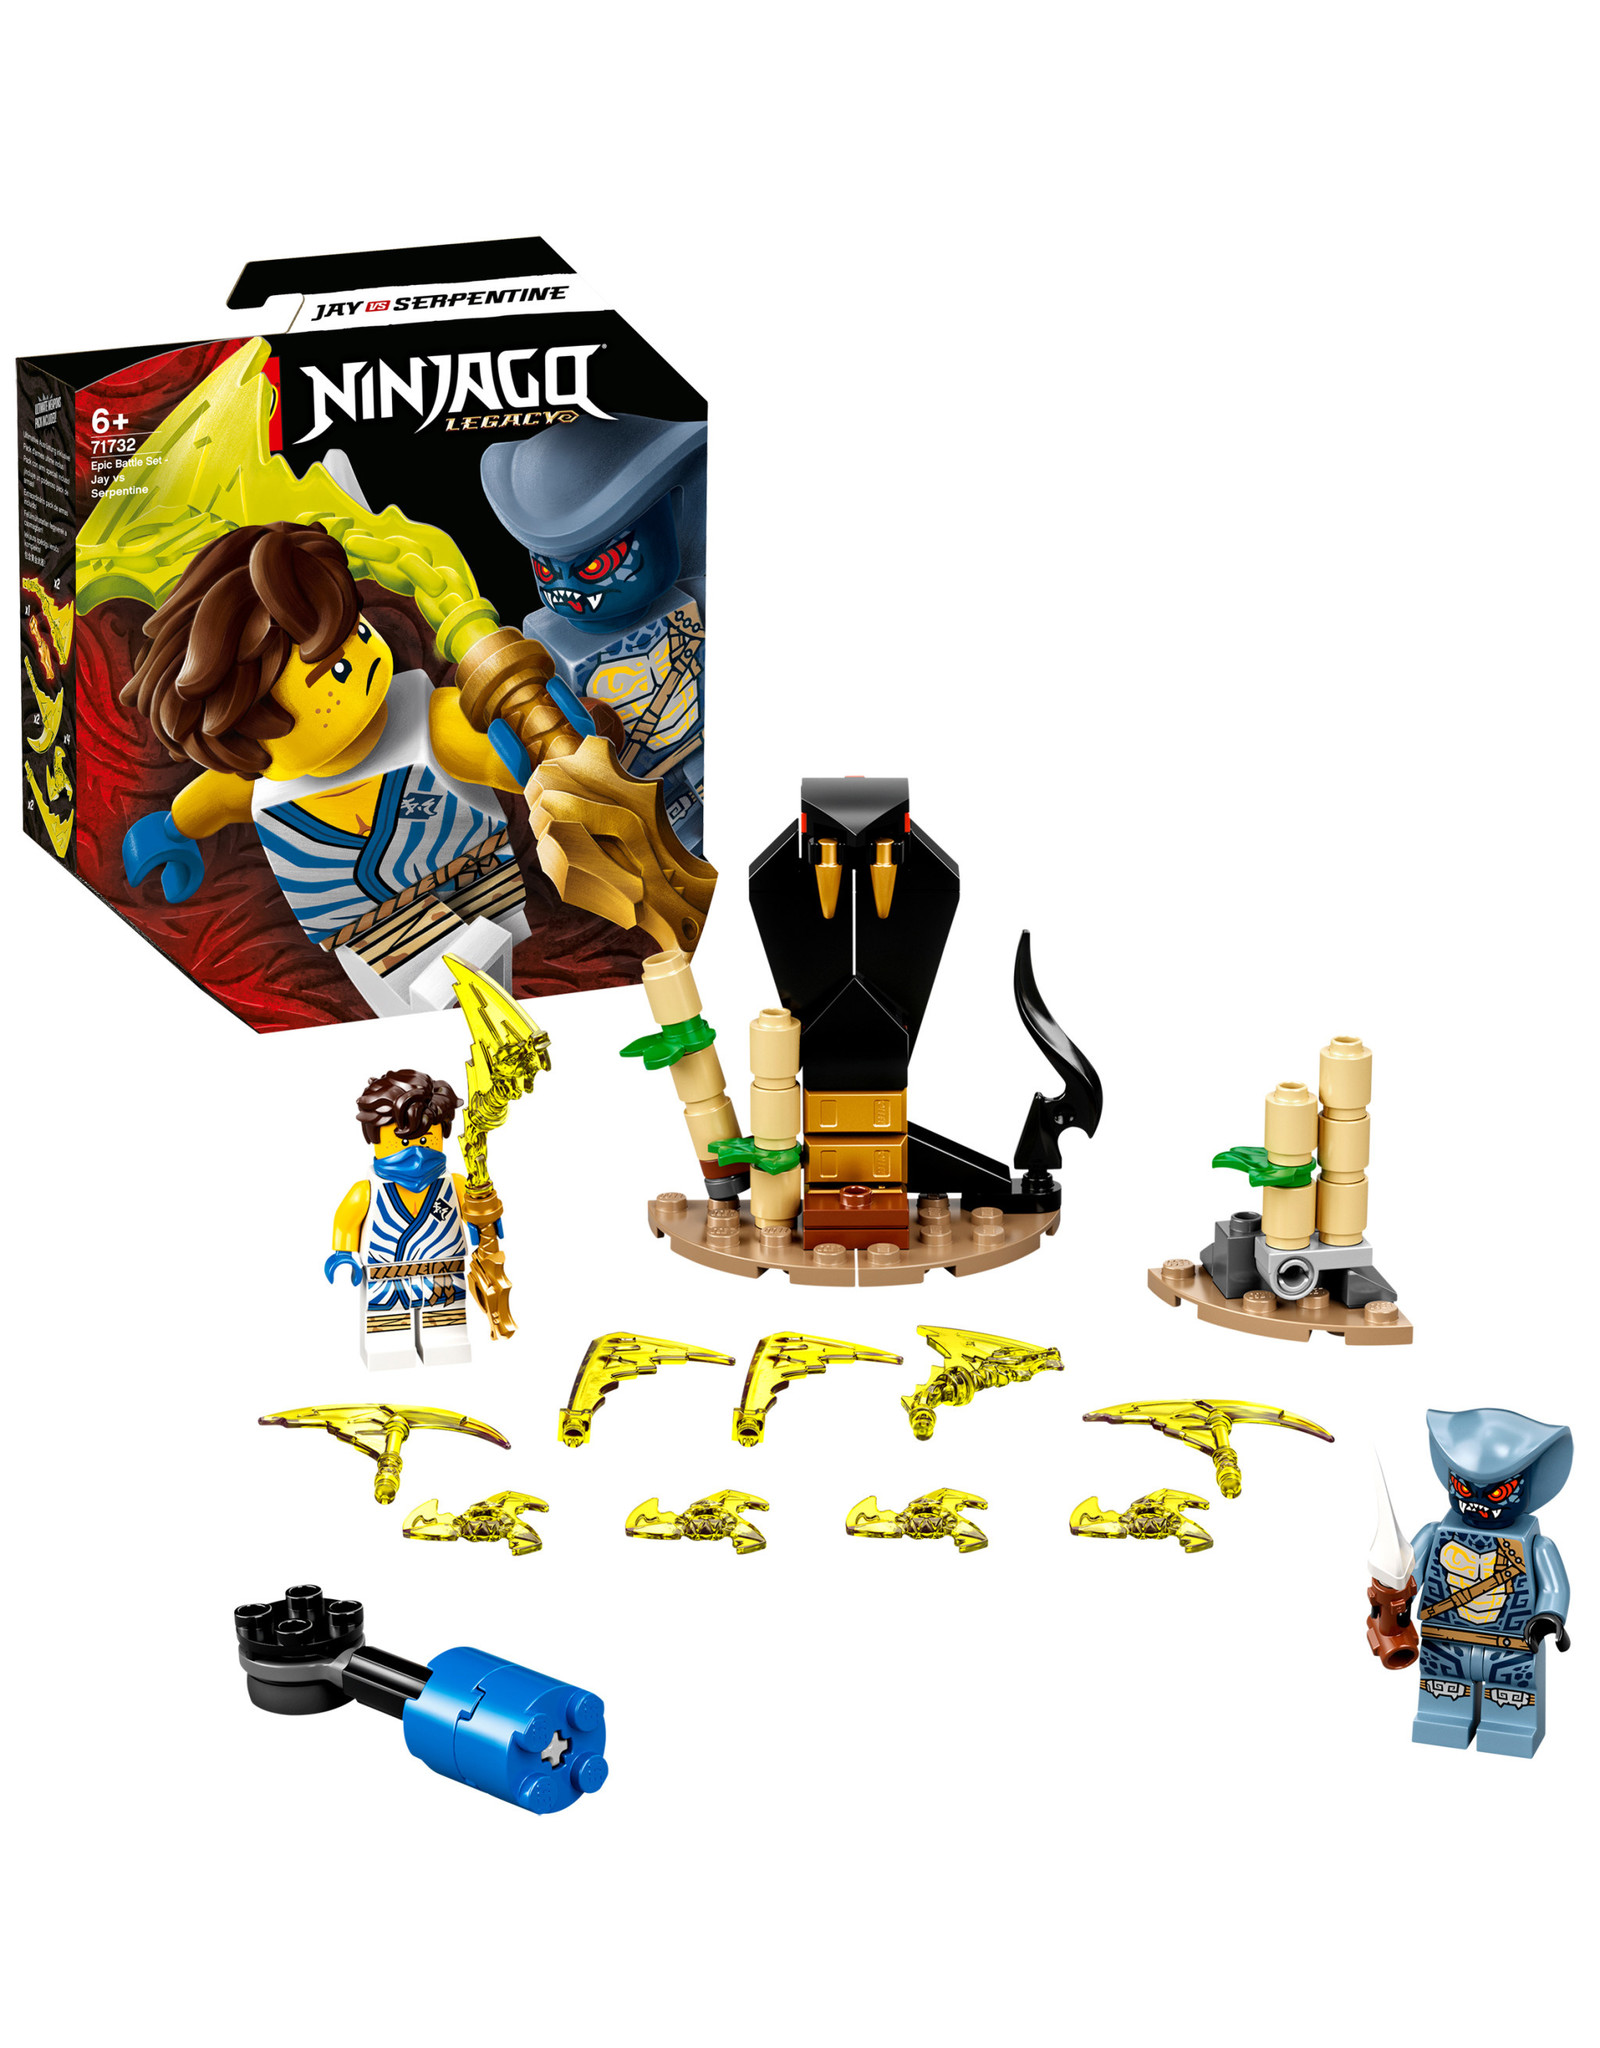 LEGO Lego Ninjago 71732 Epische Strijd set - Jay tegen Serpentine - Epic Battle Set Jay Serpentine